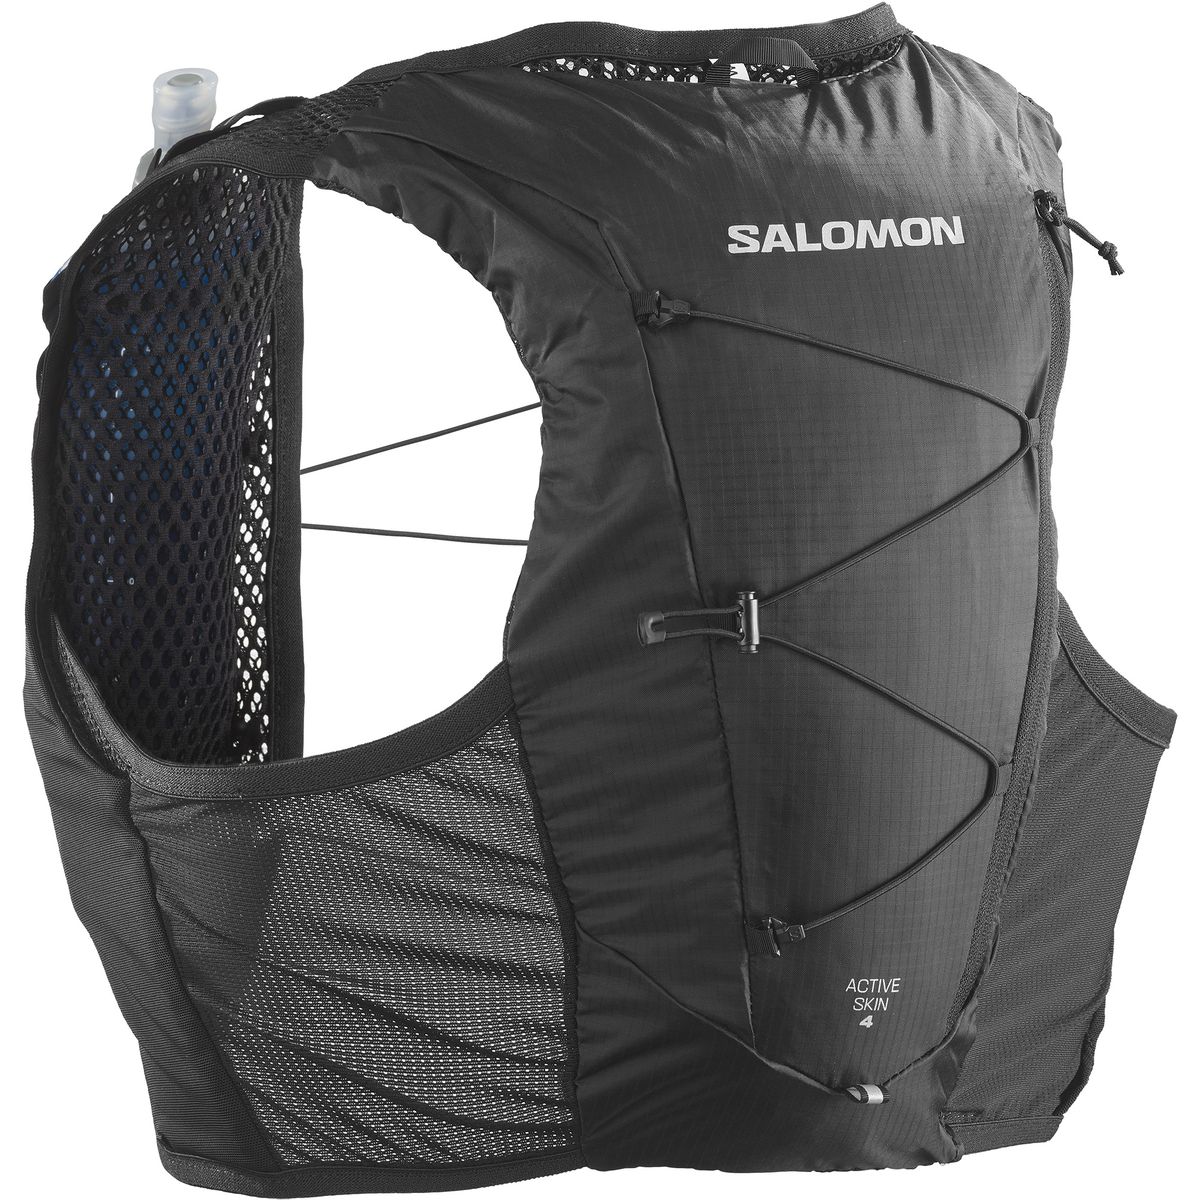 Salomon Active Skin 4 Runningrucksack